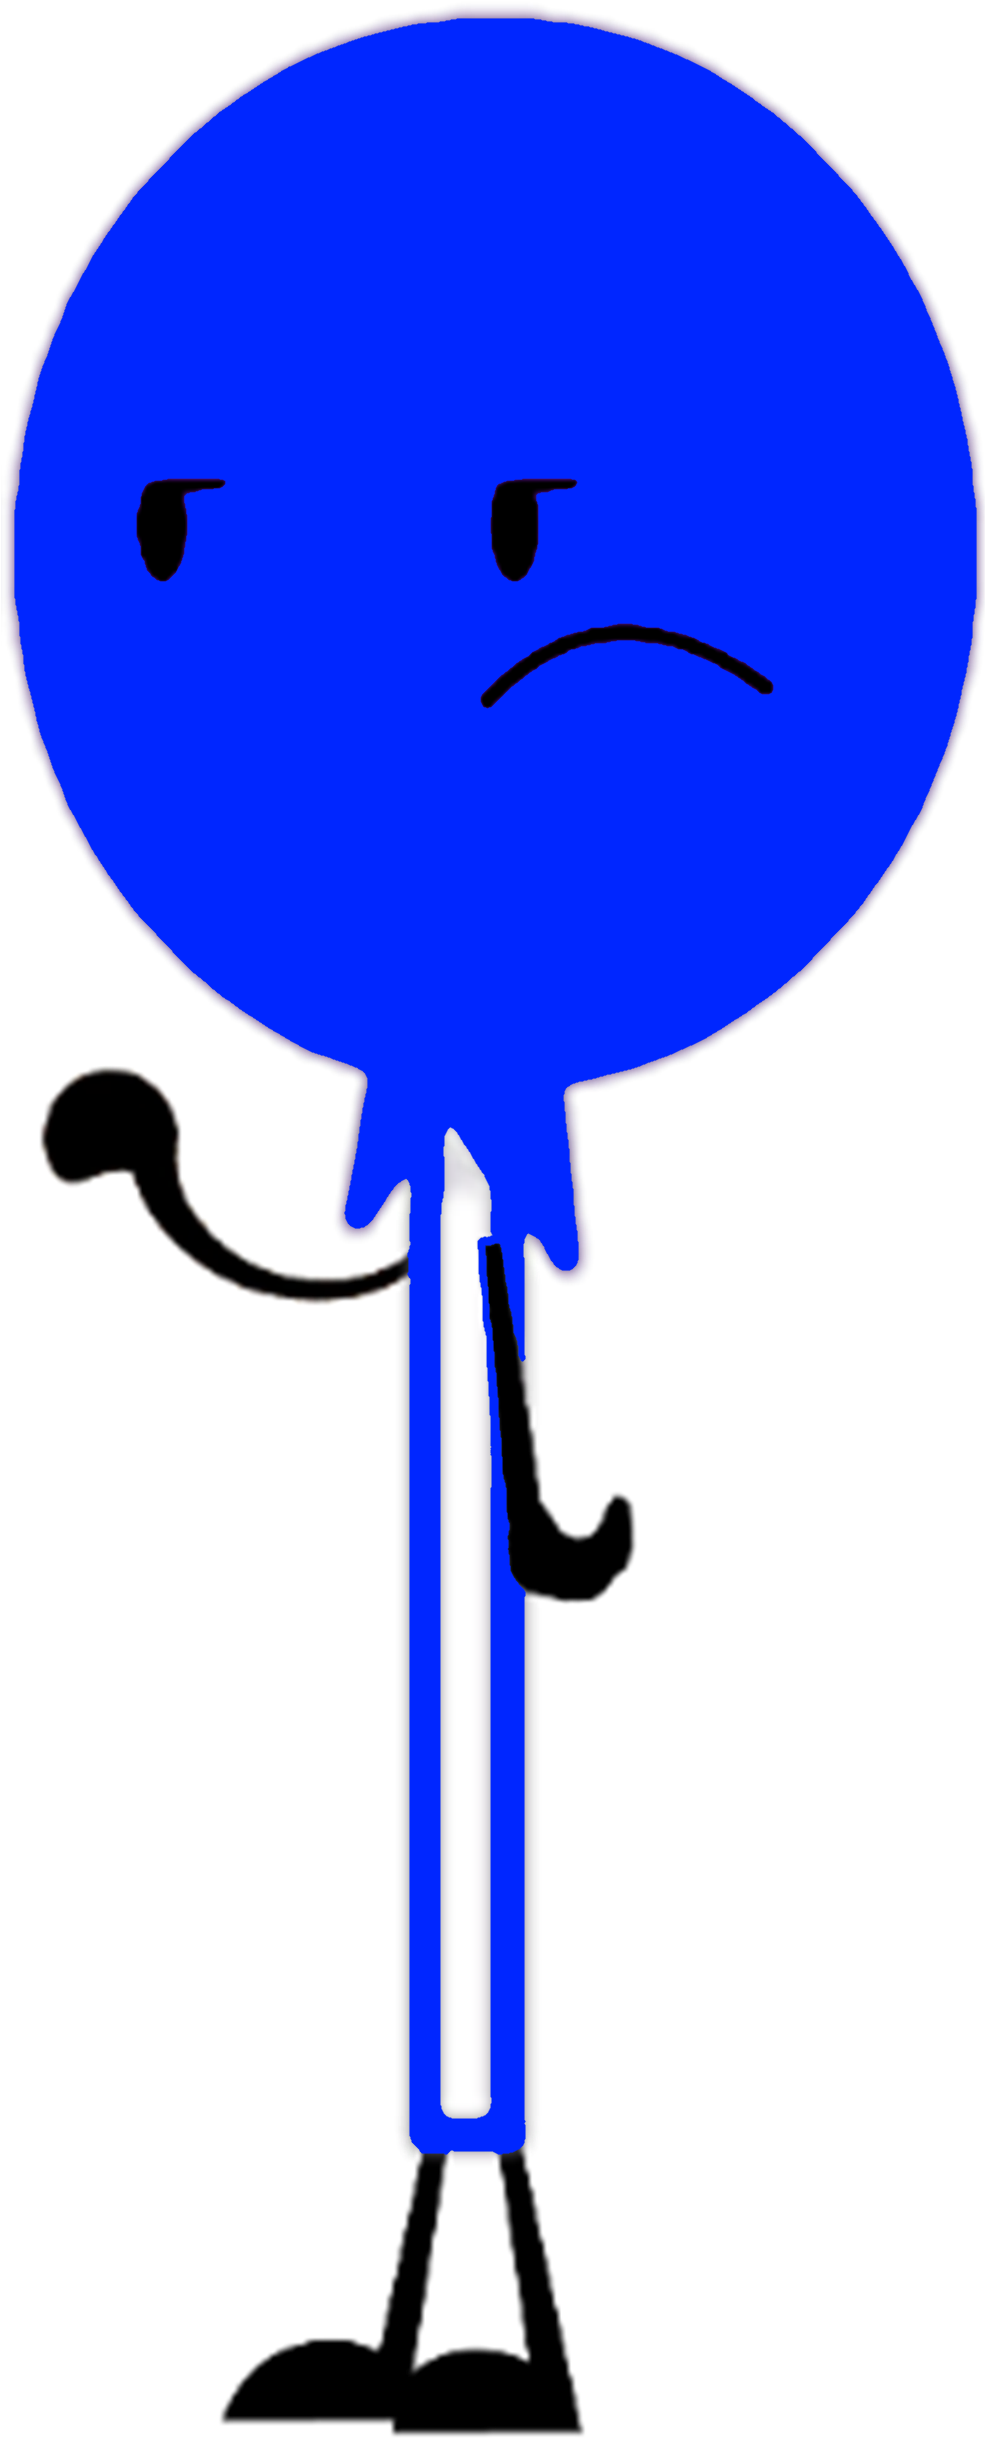 991 X 2466 3 - Blue Lollipop Object Show (991x2466)